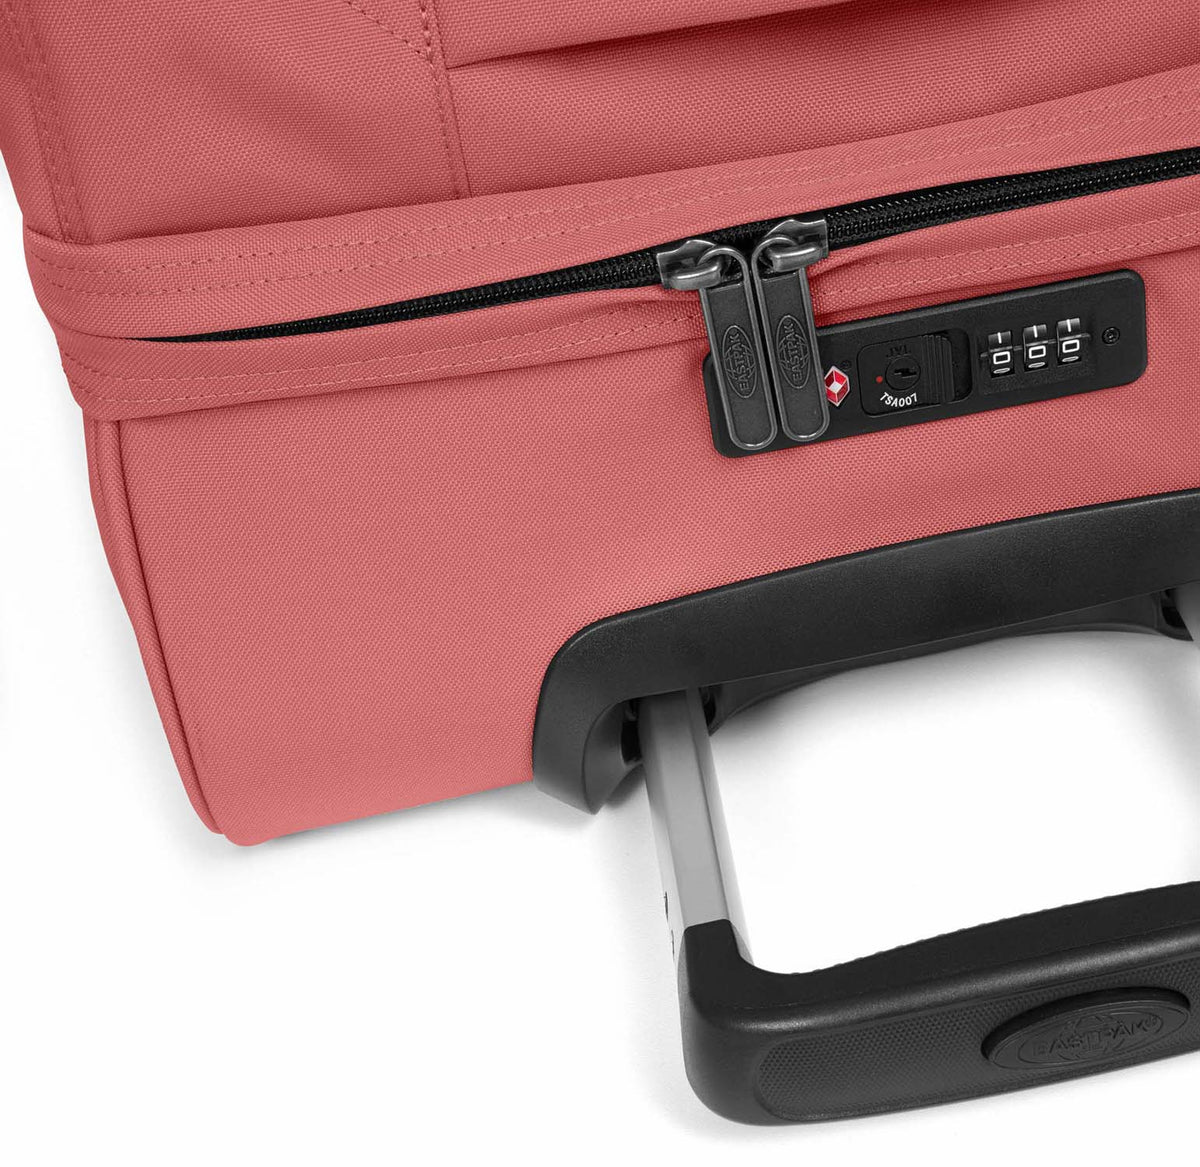 Eastpak Transit'R L Suitcase - Terra Pink